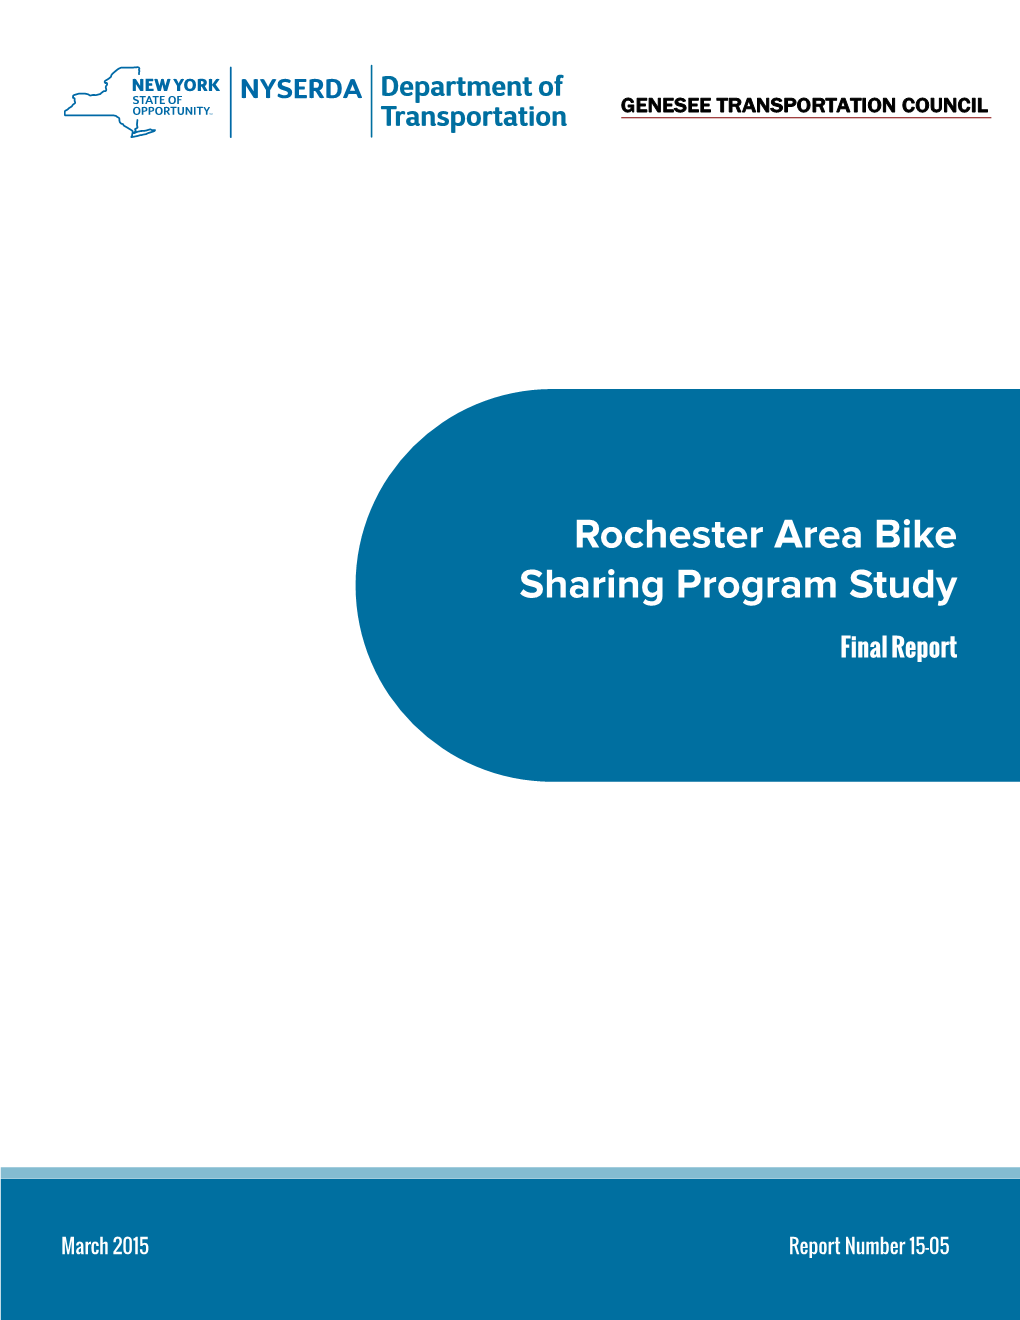 15-05 Rochester Area Bike Sharing Program Study